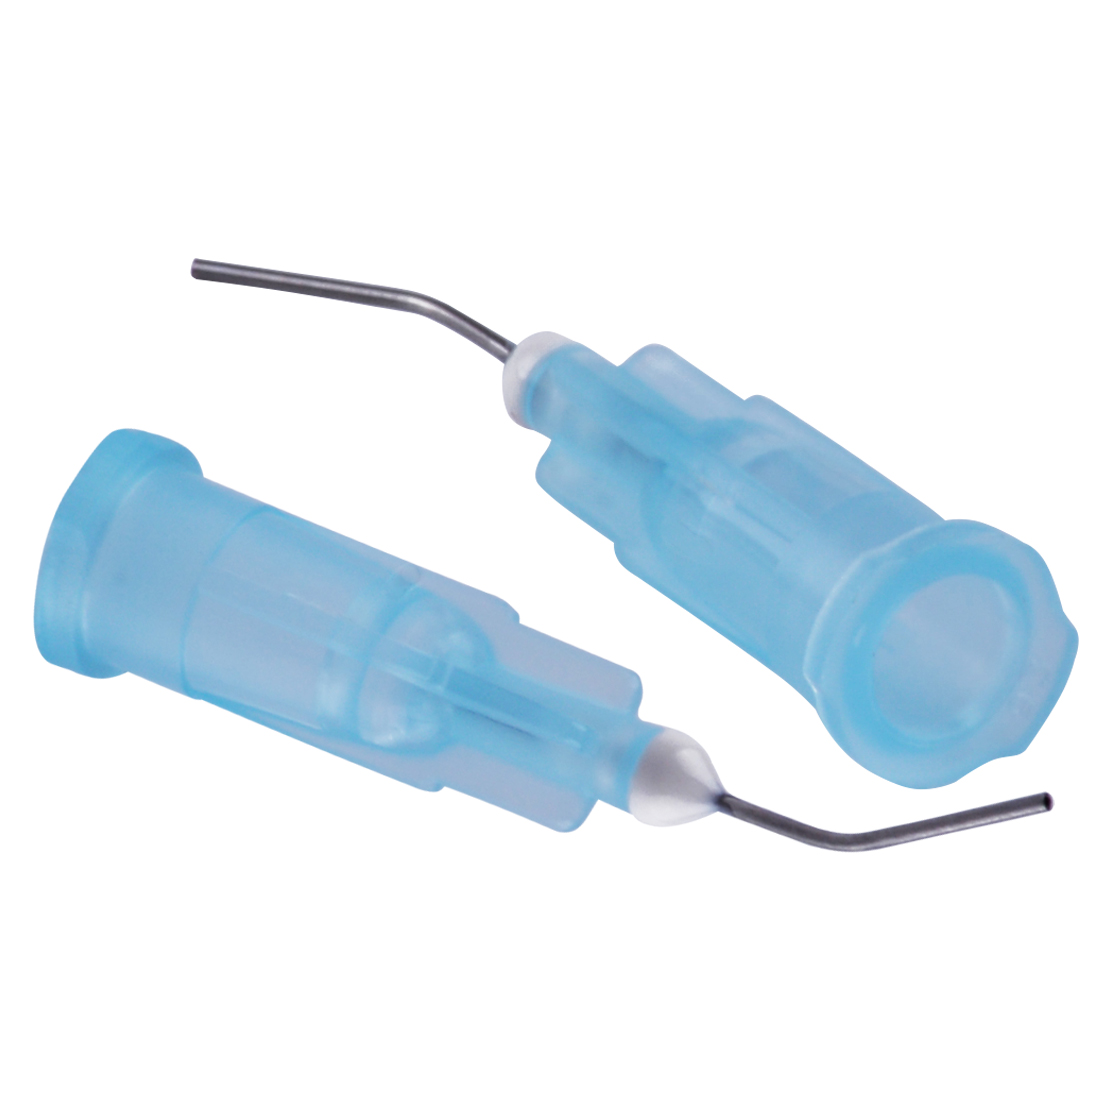 6PCS Mixed Plastic Blunt Dispensing Syringe Needle Tips